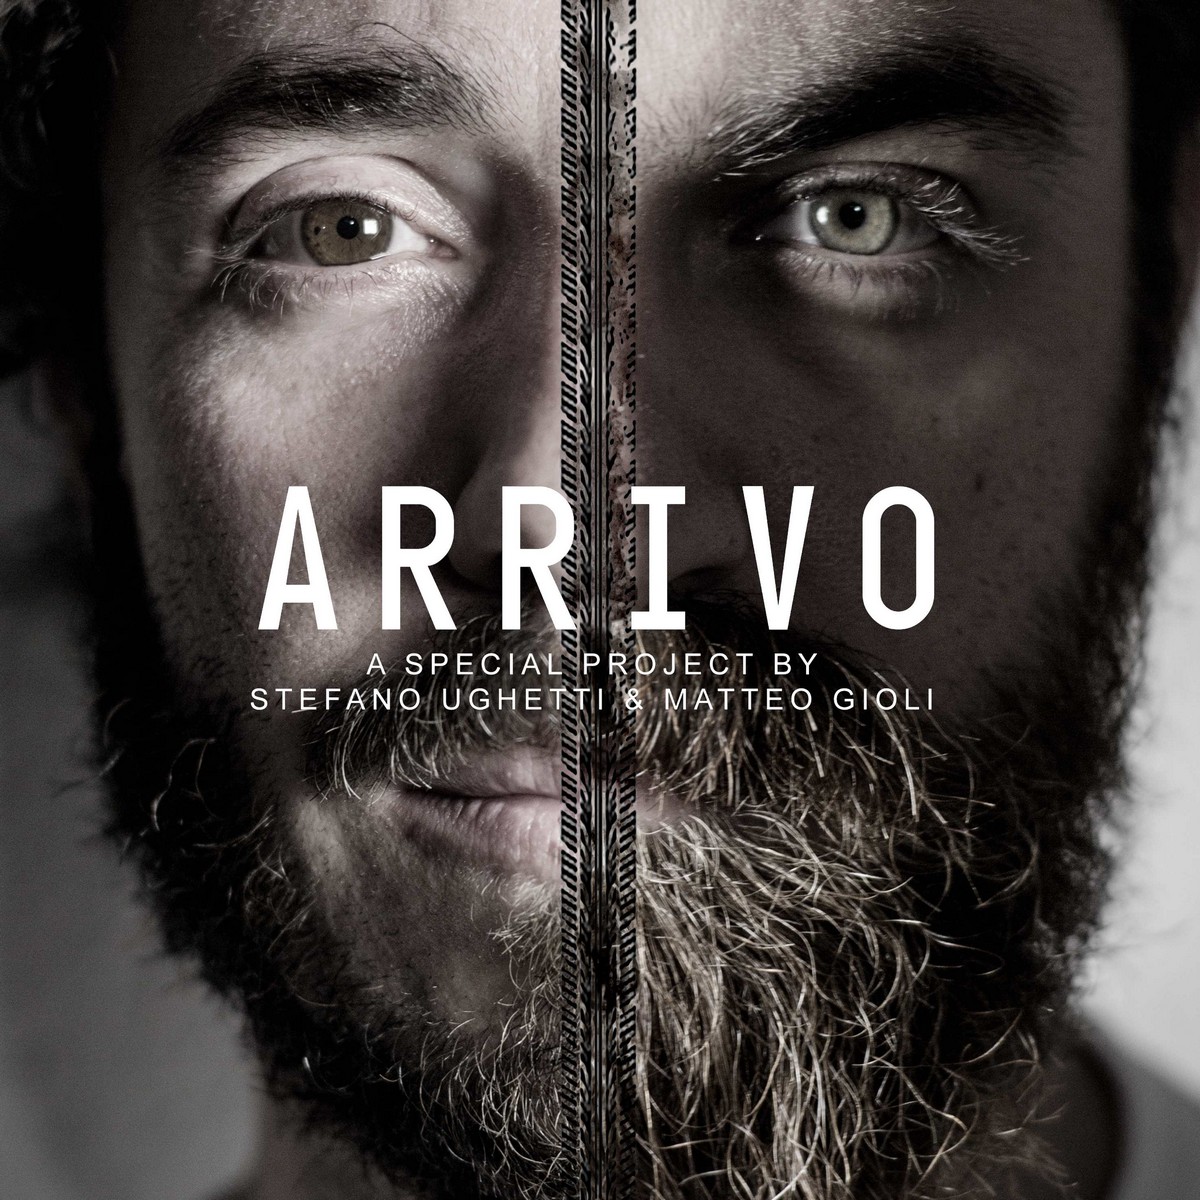 ARRIVO by Stefano Ughetti & Matteo Gioli (scritte)